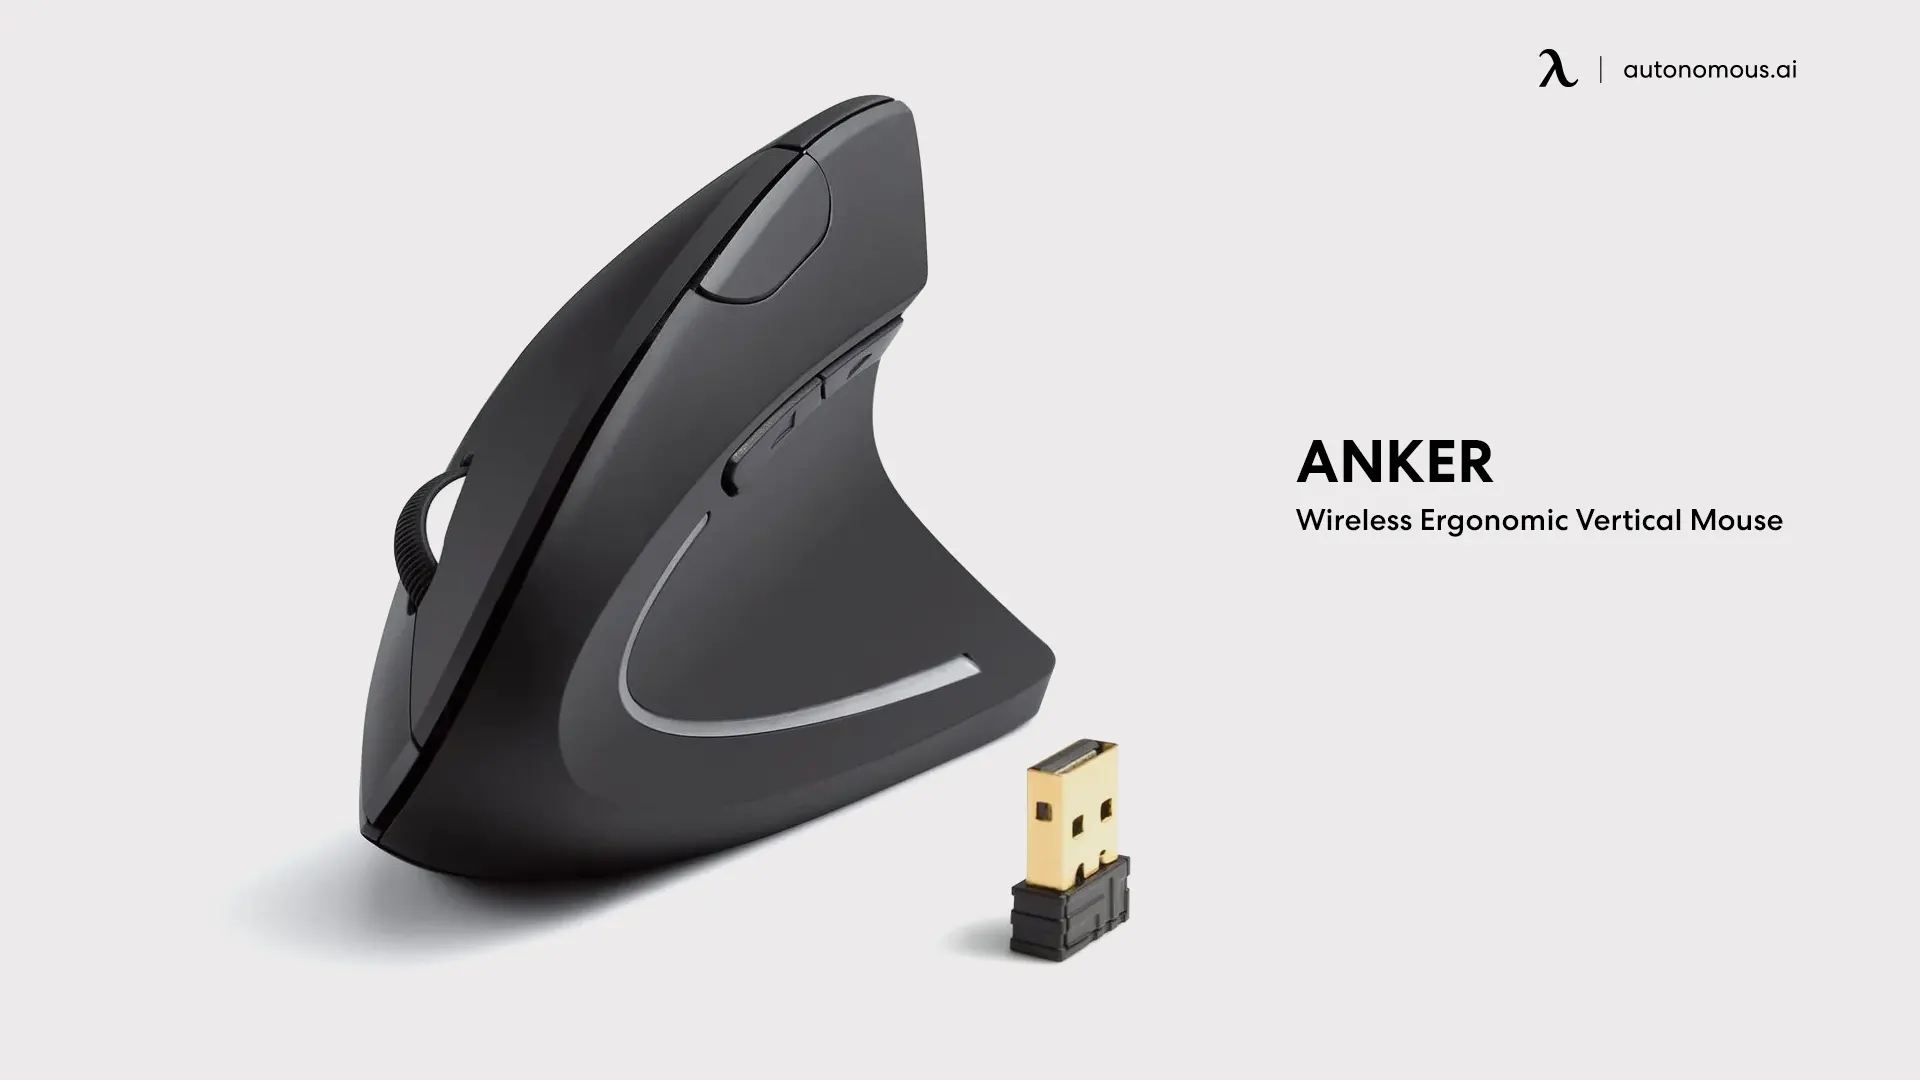 Anker's Wireless Ergonomic Vertical Mouse